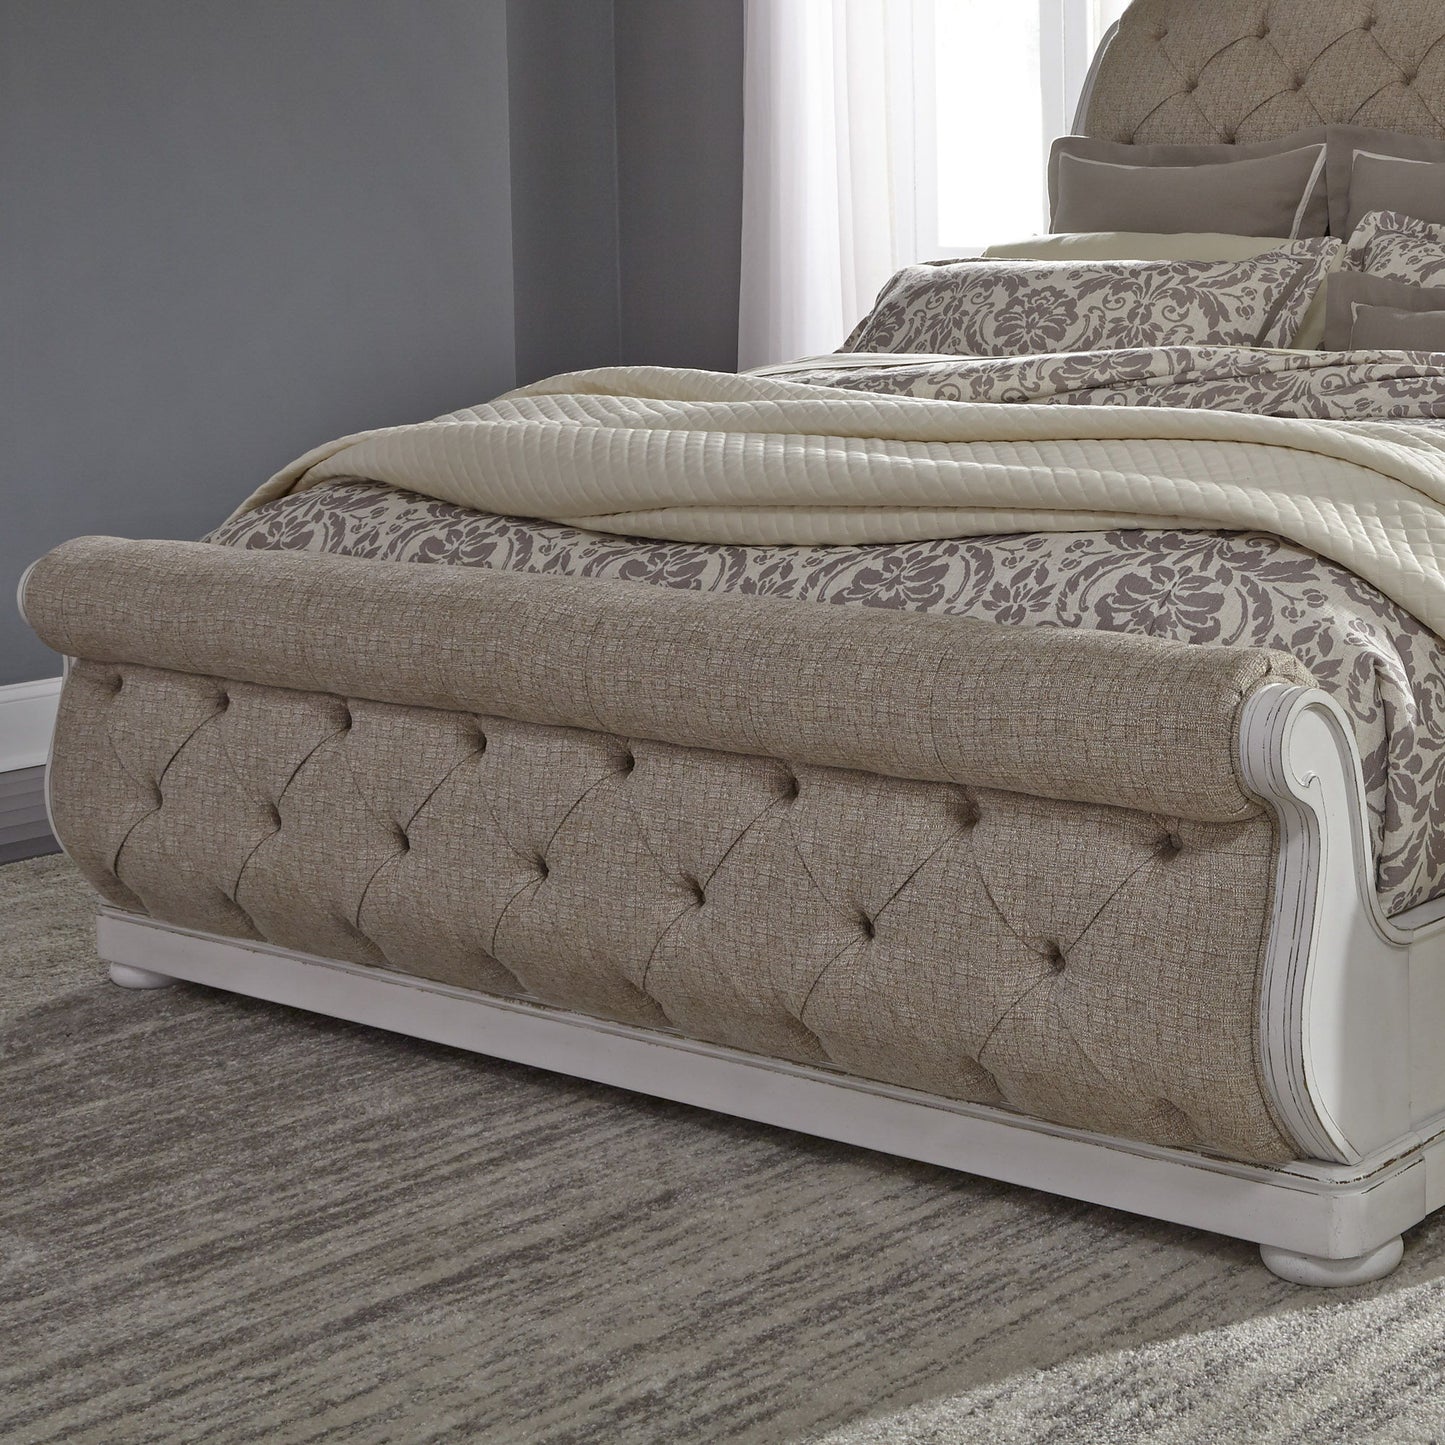 Abbey Park - King Upholstered Sleigh Bed - White